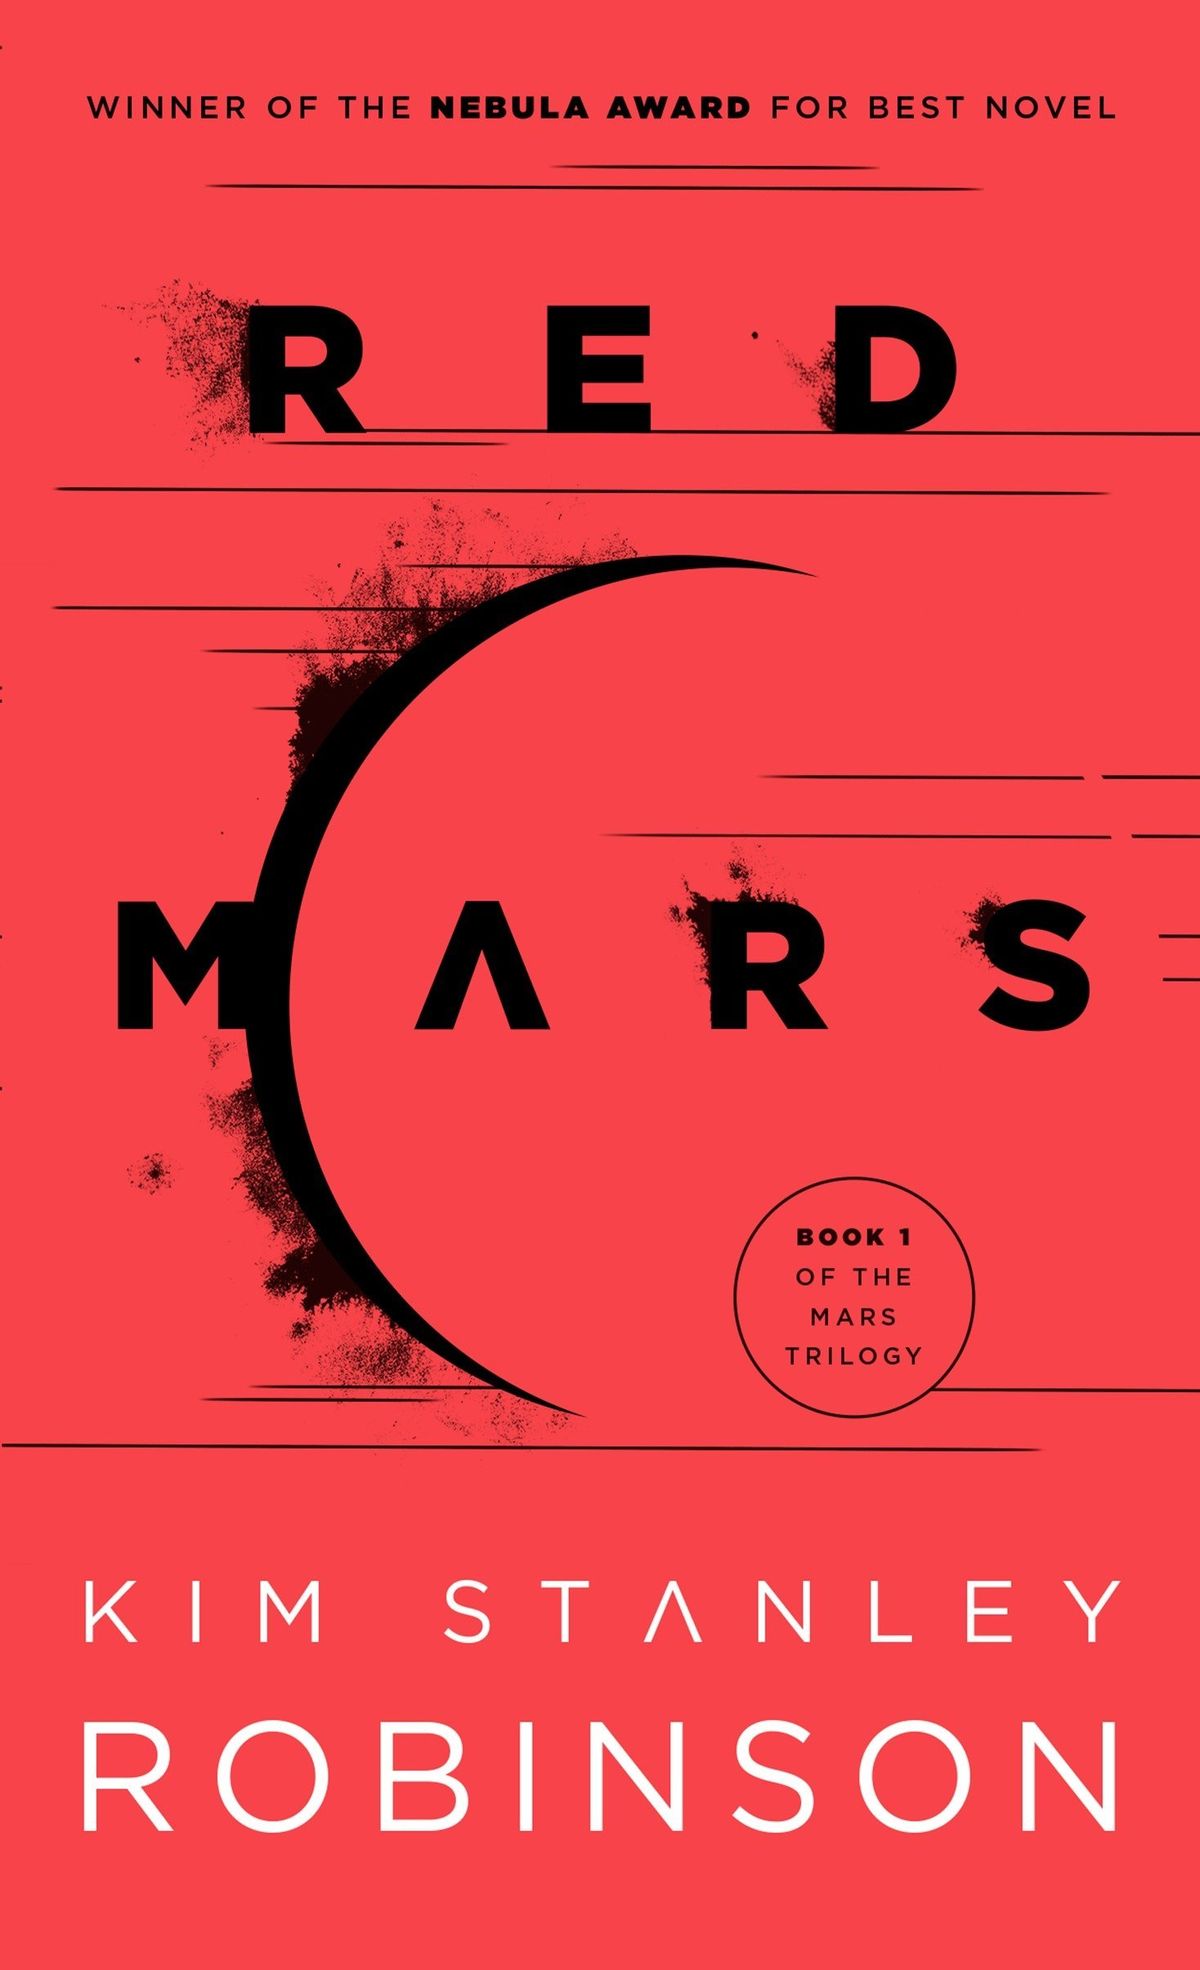 Omslaget till Kim Stanley Robinsons Red Mars